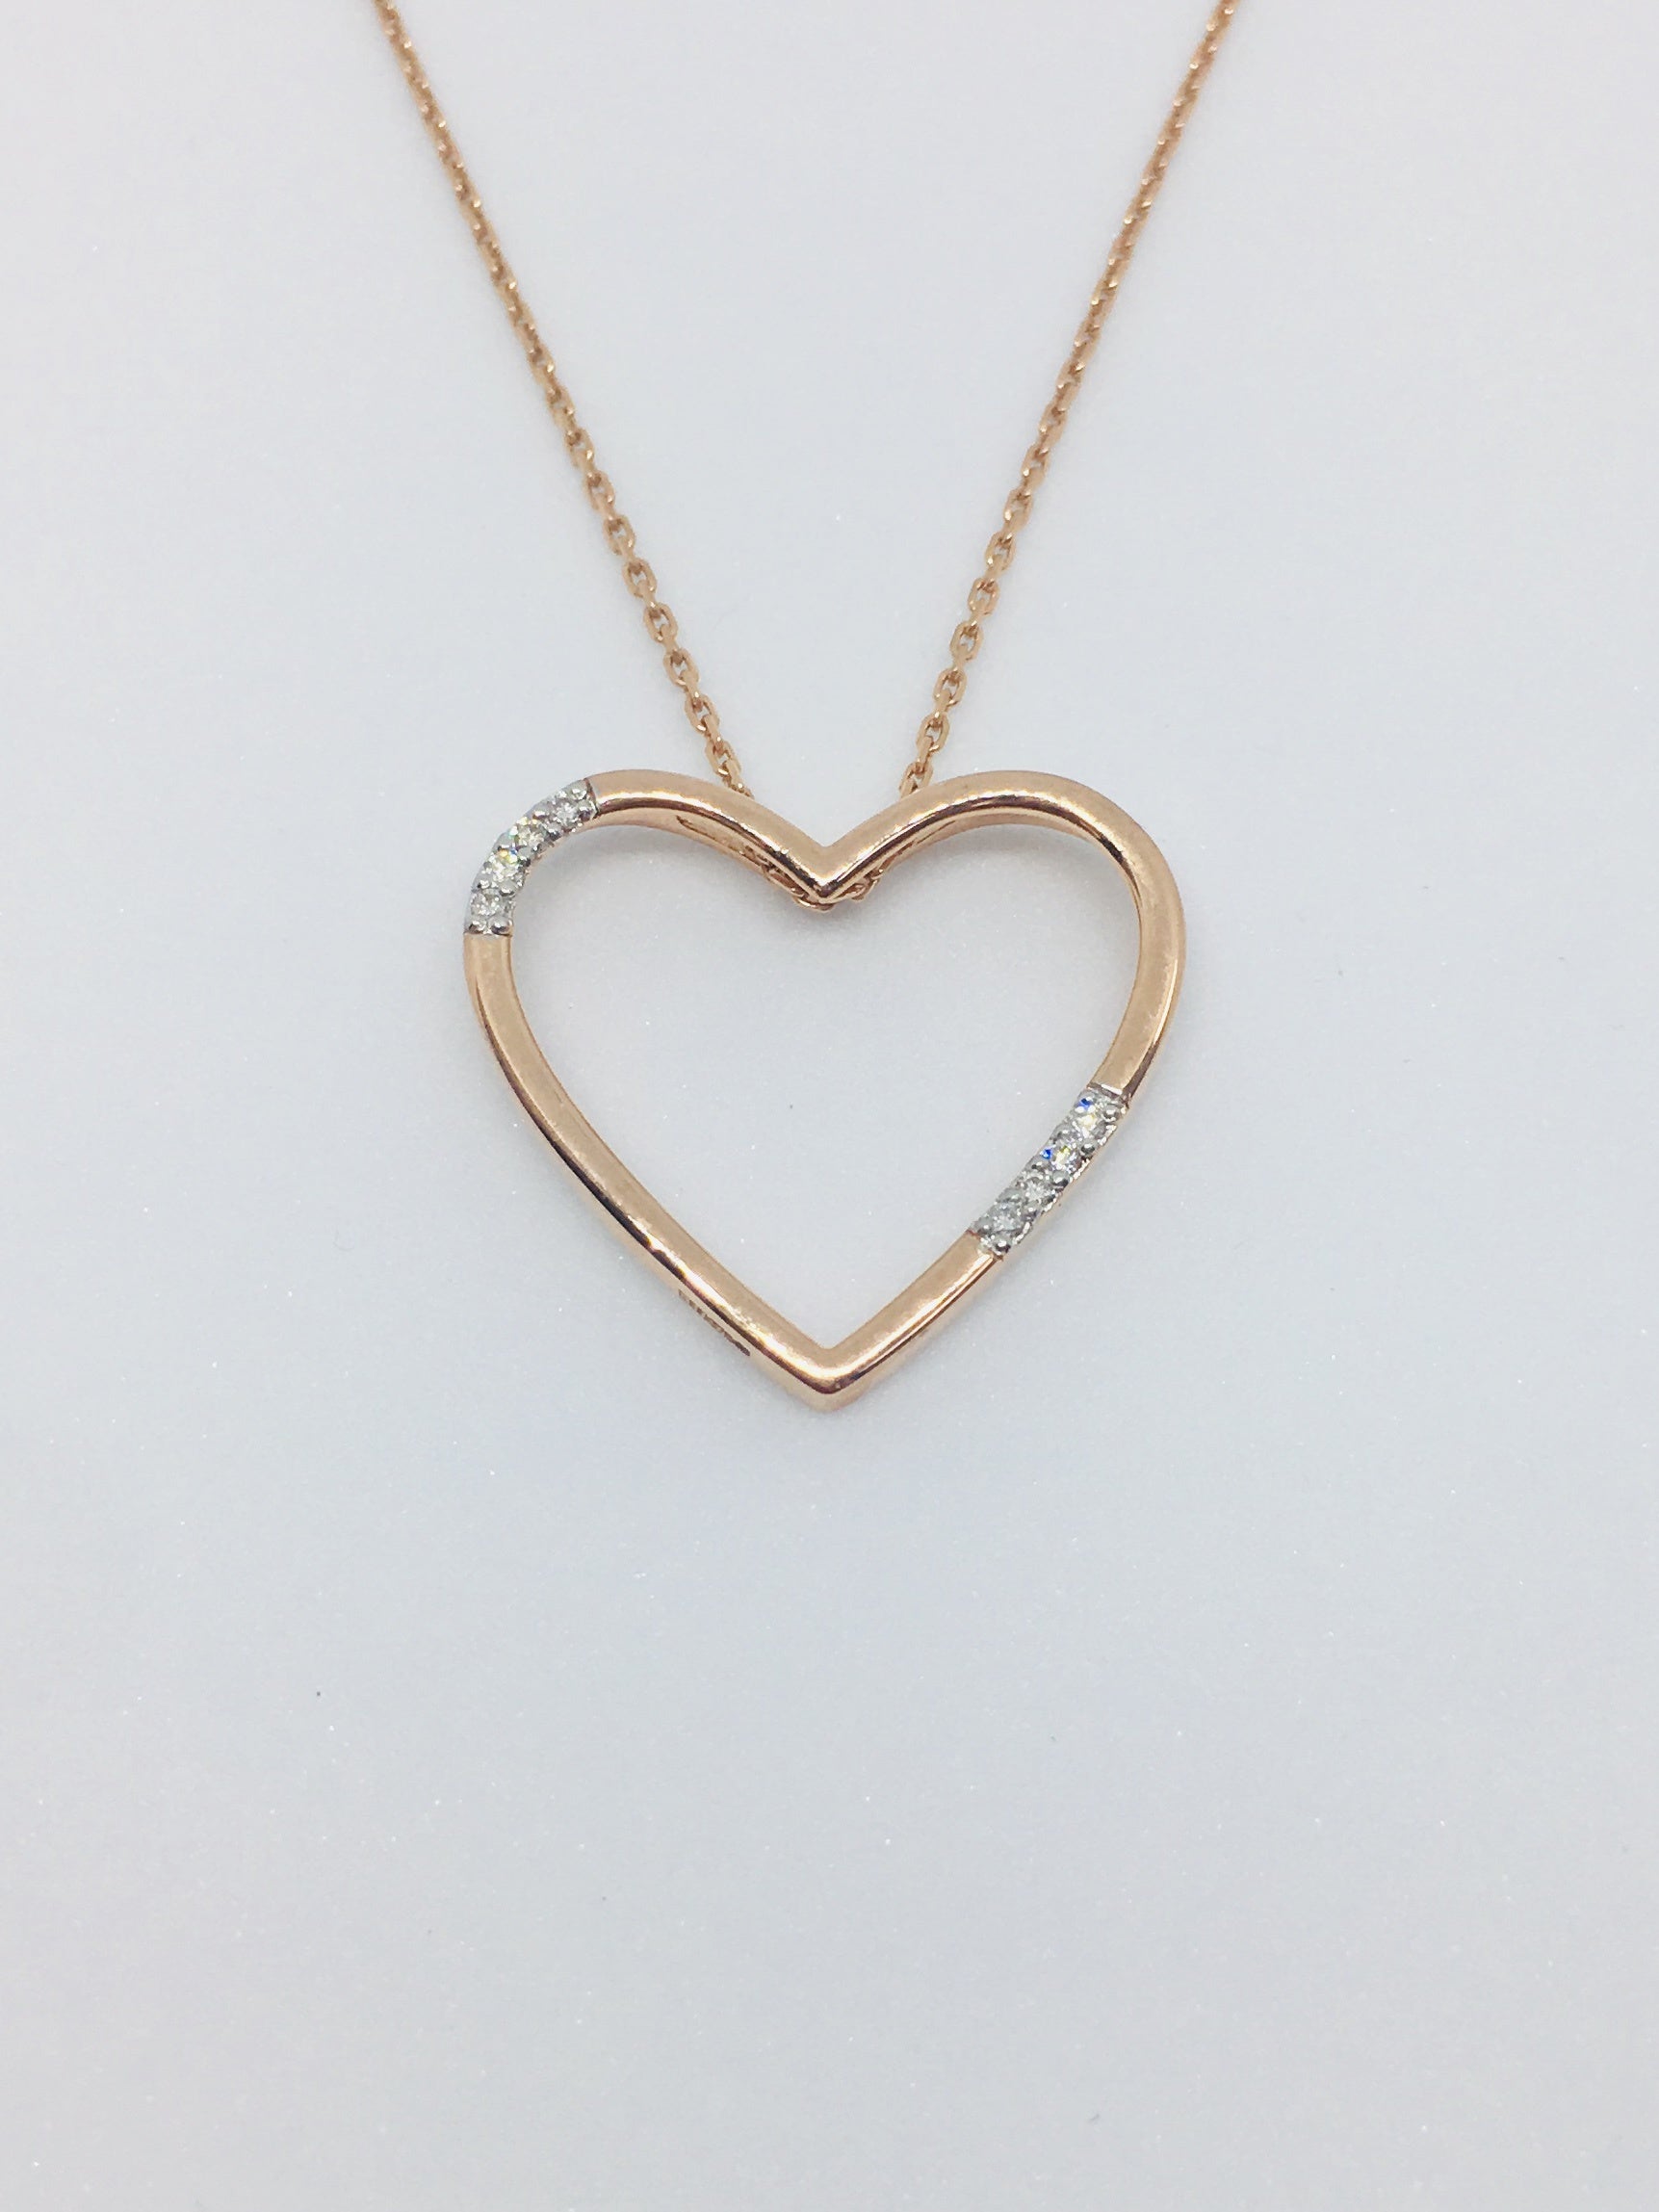 9ct Rose Gold & Diamond Heart Pendant 0.04cts - 2530047